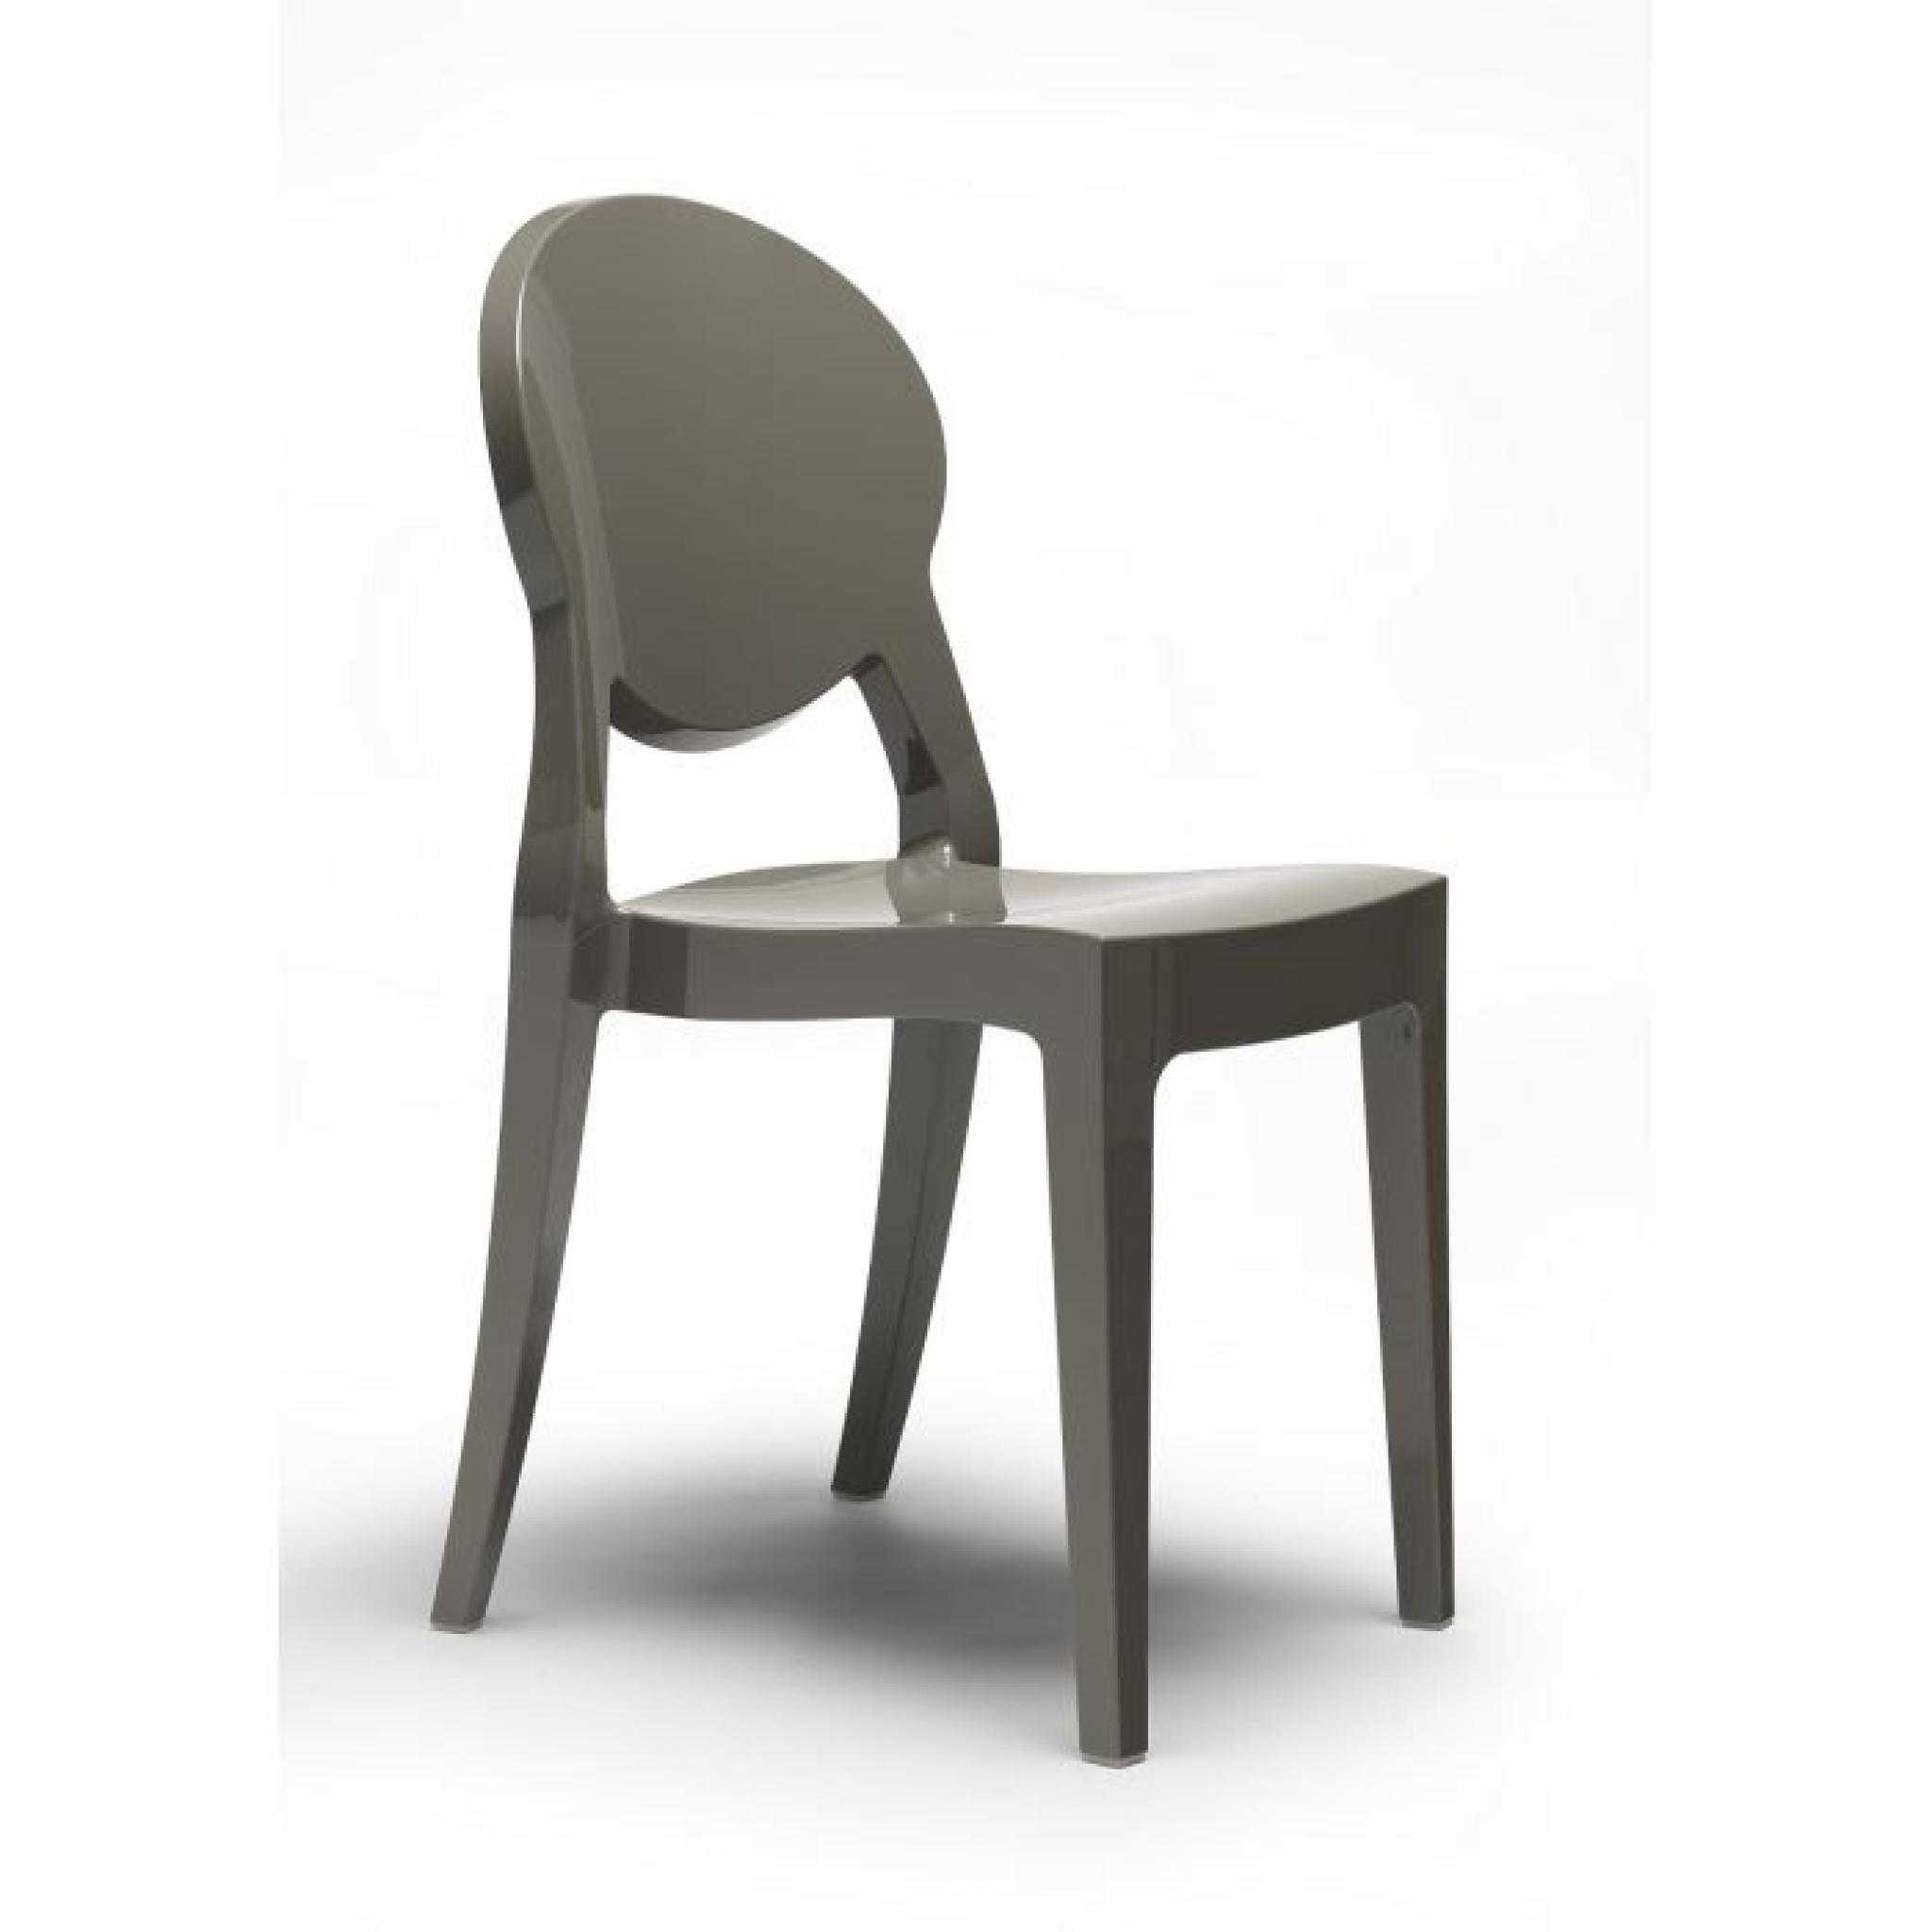 Chaise grise design - IGLOO grise - deco originale